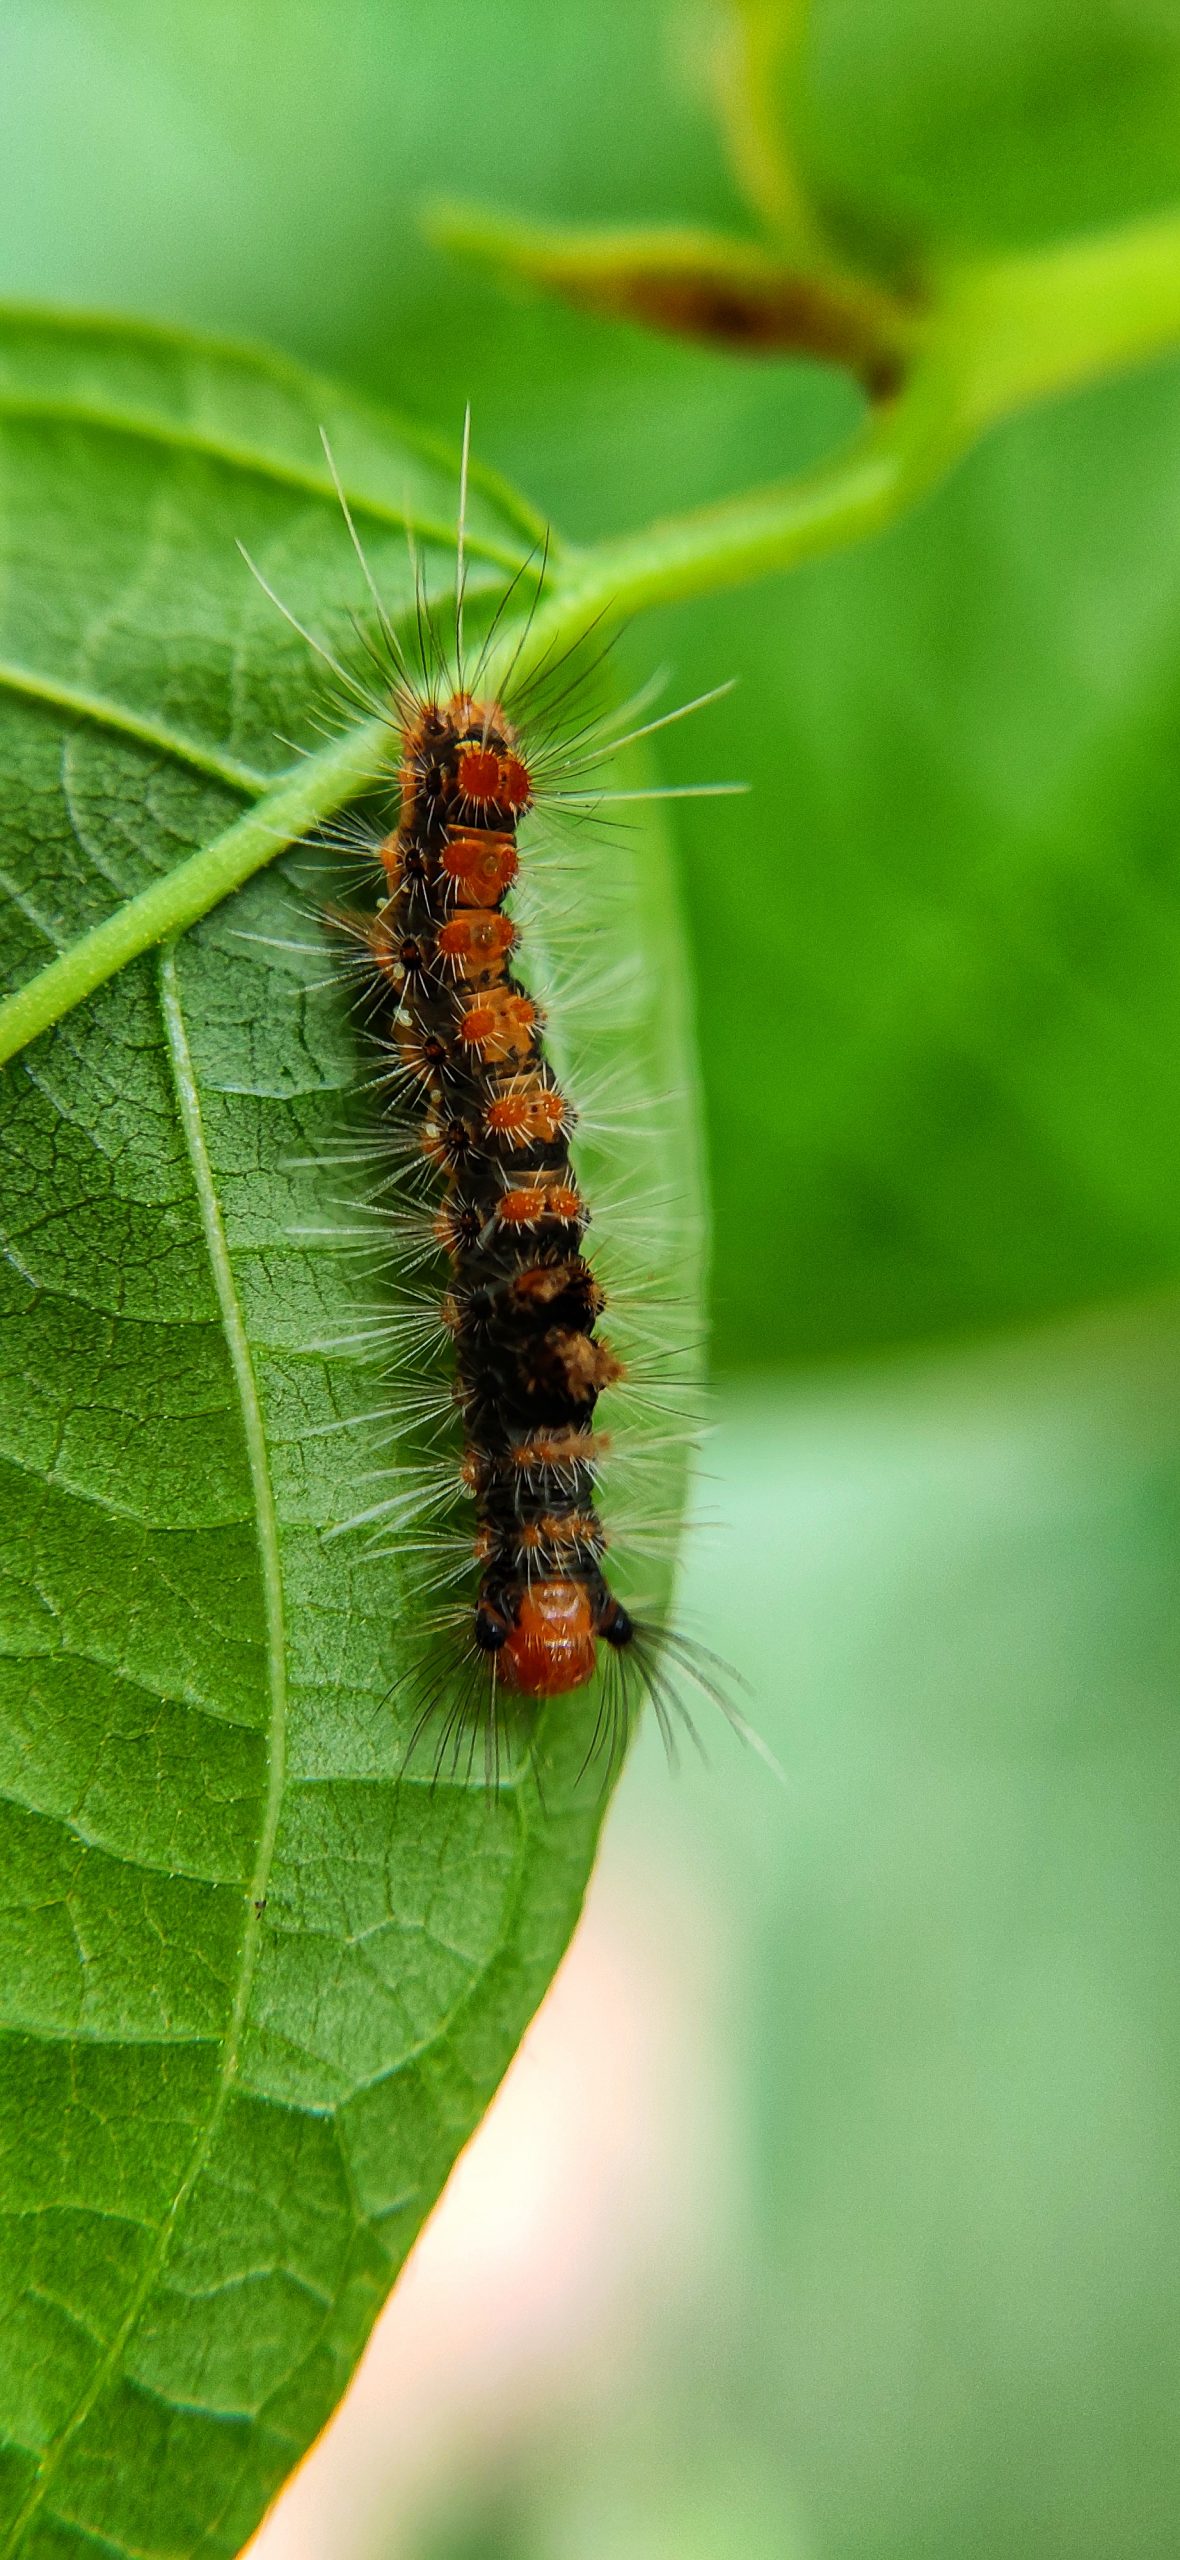 Caterpillar on plant leaf